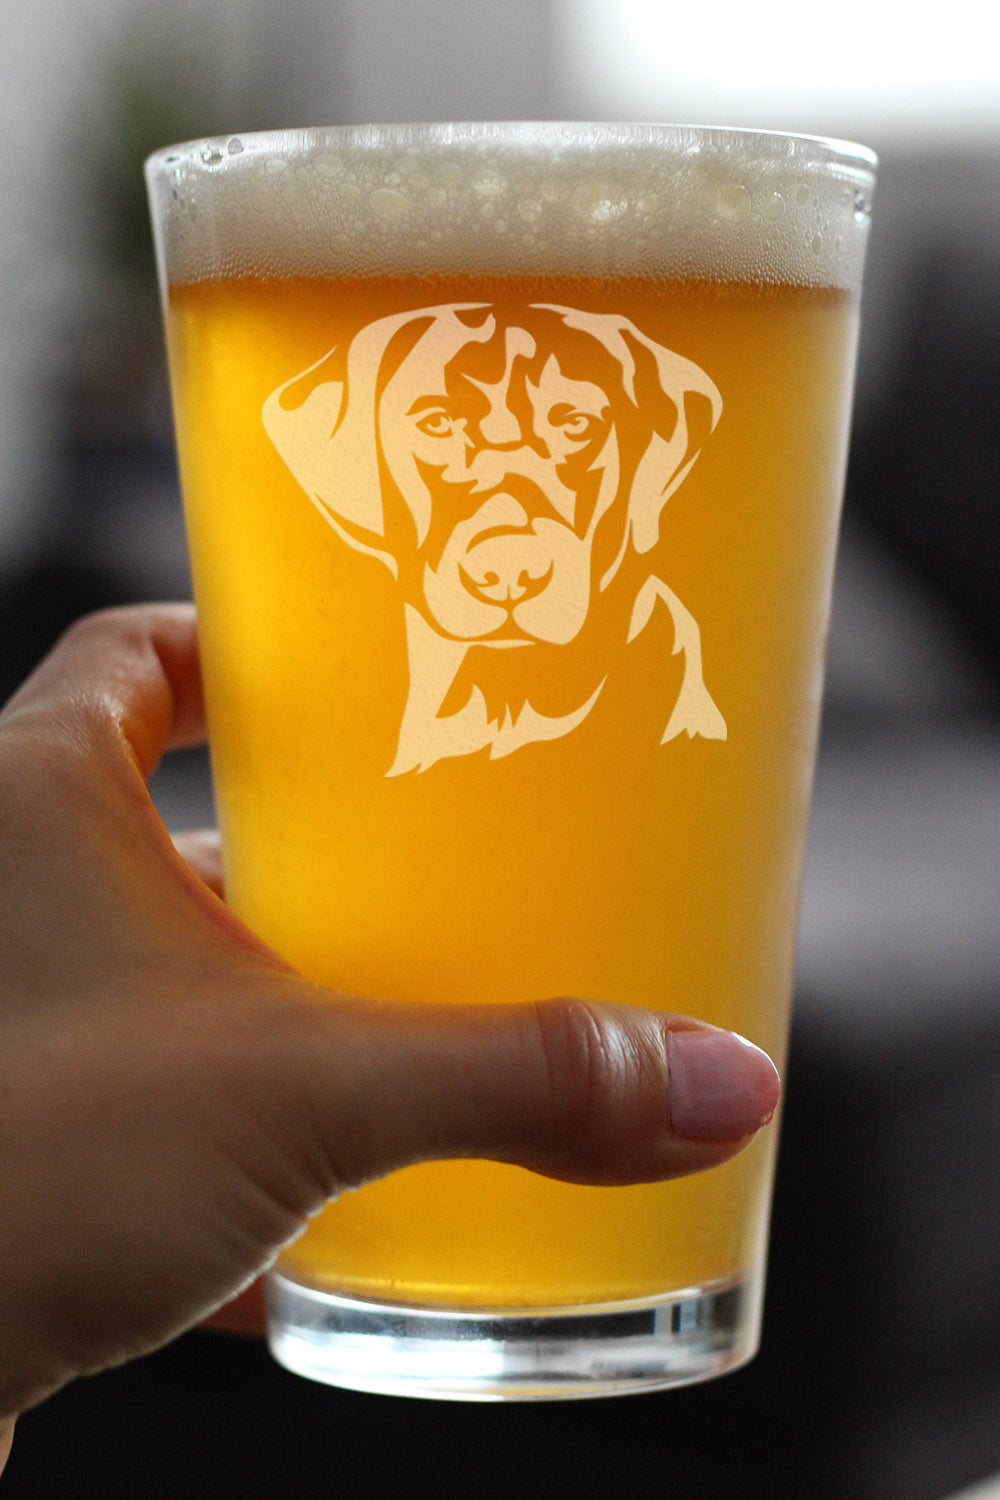 Black Lab Face - Labrador Retriever Pint Glass for Beer - Fun Unique Dog Themed Decor Gifts for Men &amp; Women - 16 oz